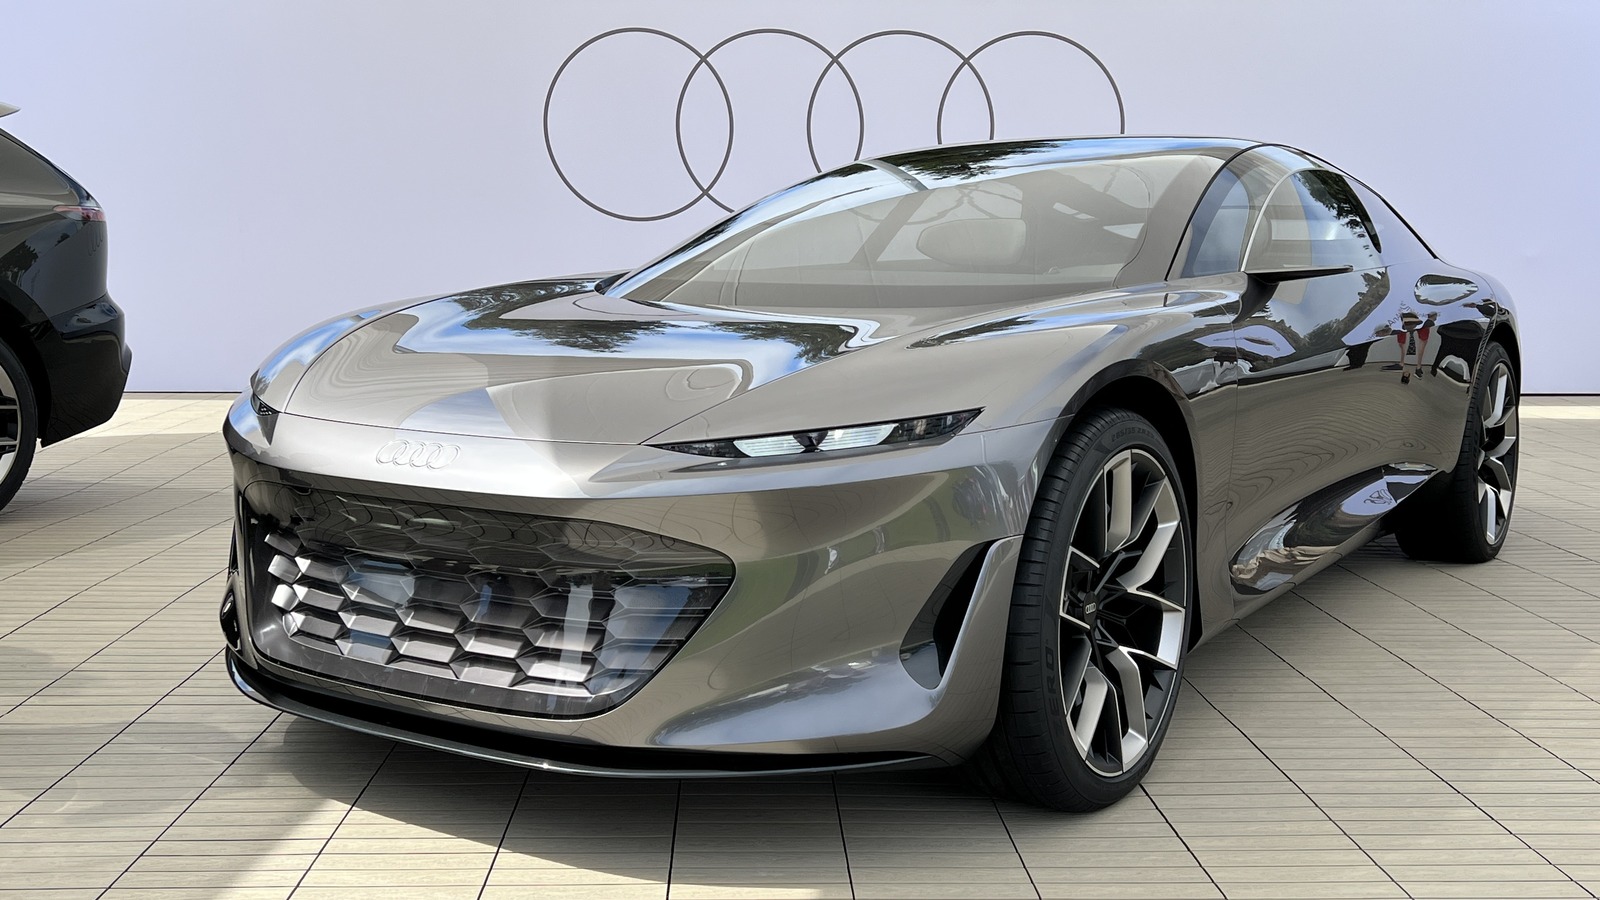 Audi Electric Concept Car